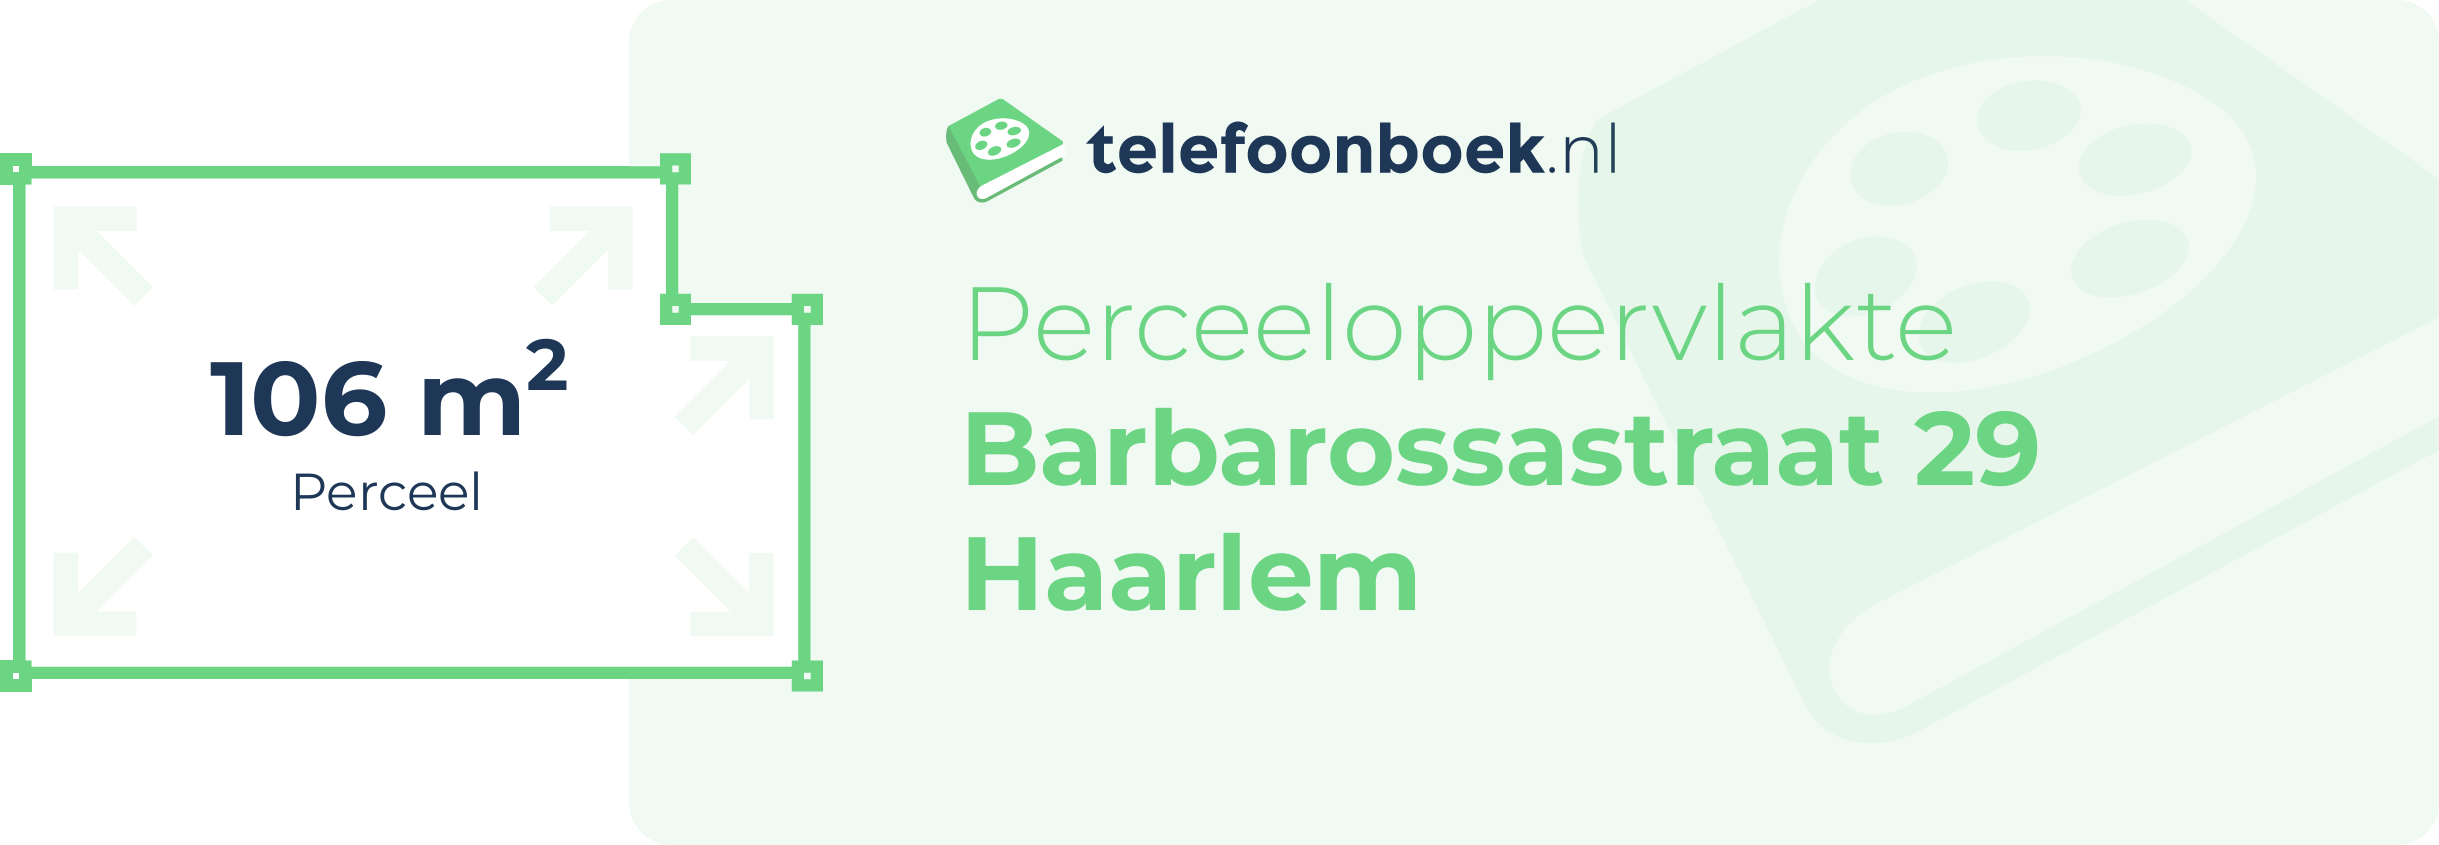 Perceeloppervlakte Barbarossastraat 29 Haarlem